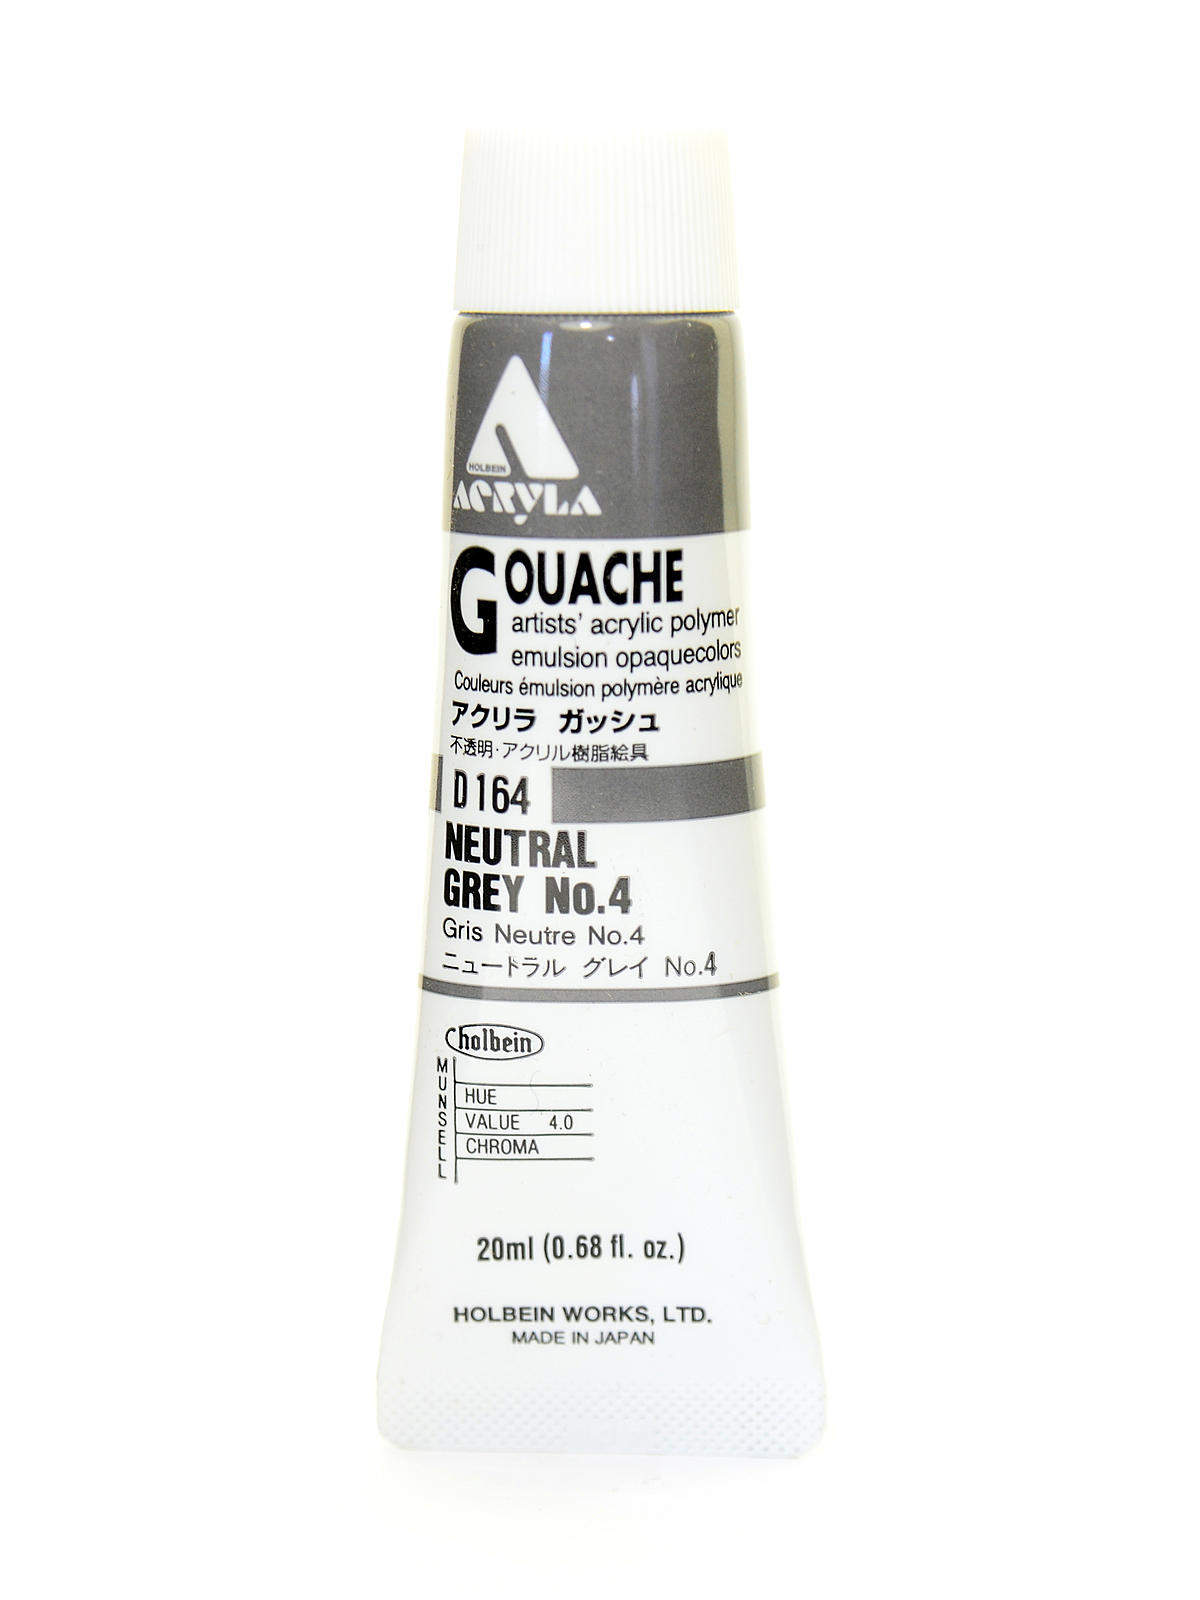 Acryla Gouache 20 Ml Neutral Grey #4